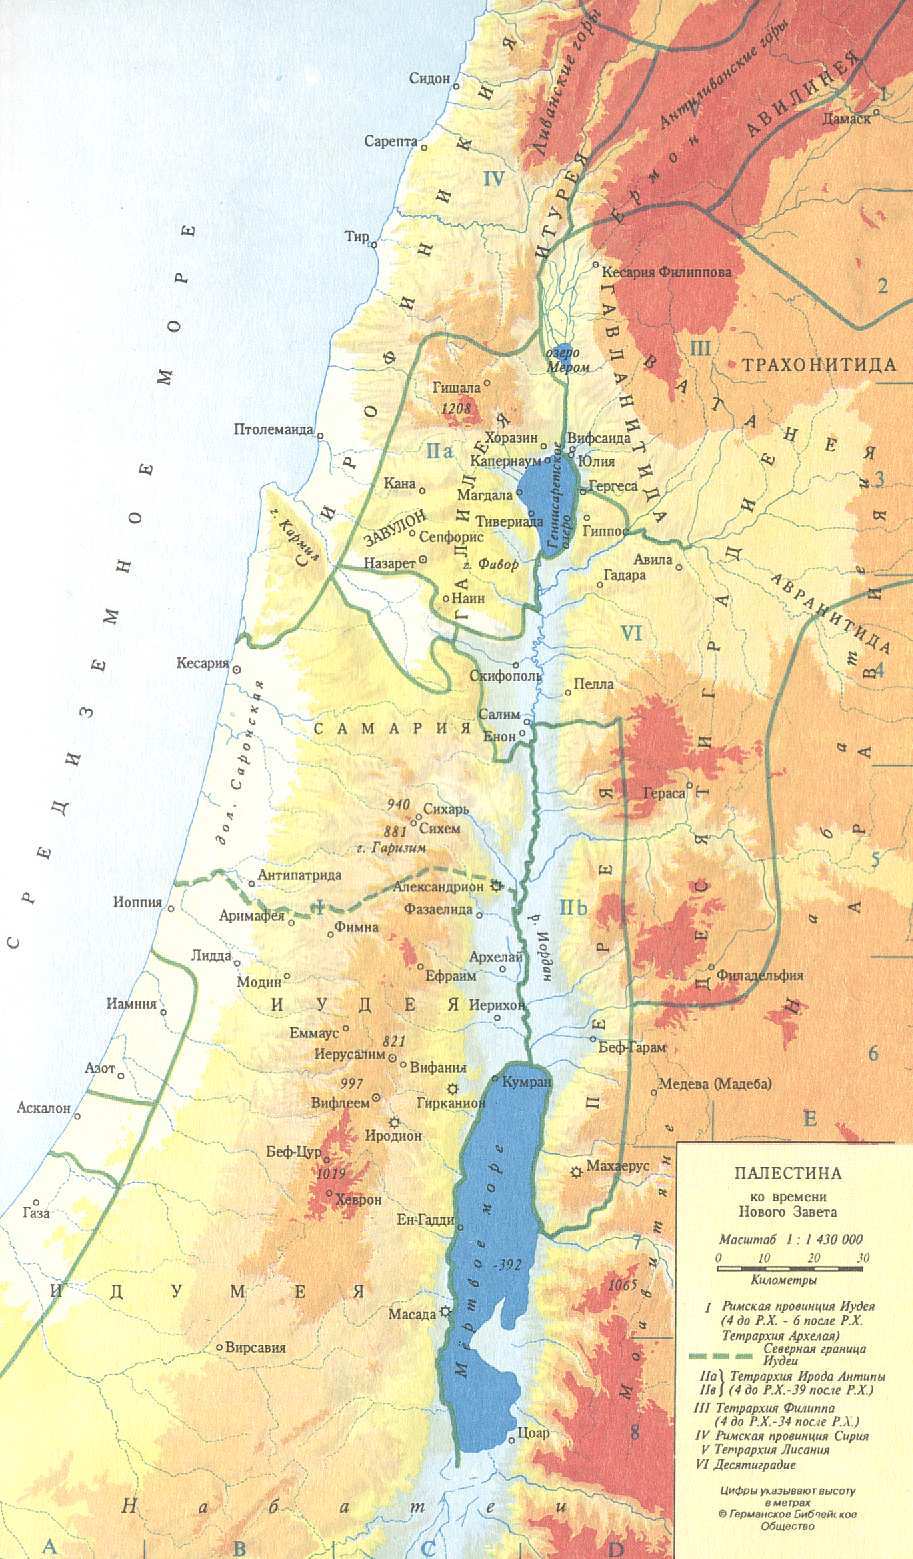 Покажи карту палестины. Государство древняя Палестина на карте. Географическая карта древней Палестины.